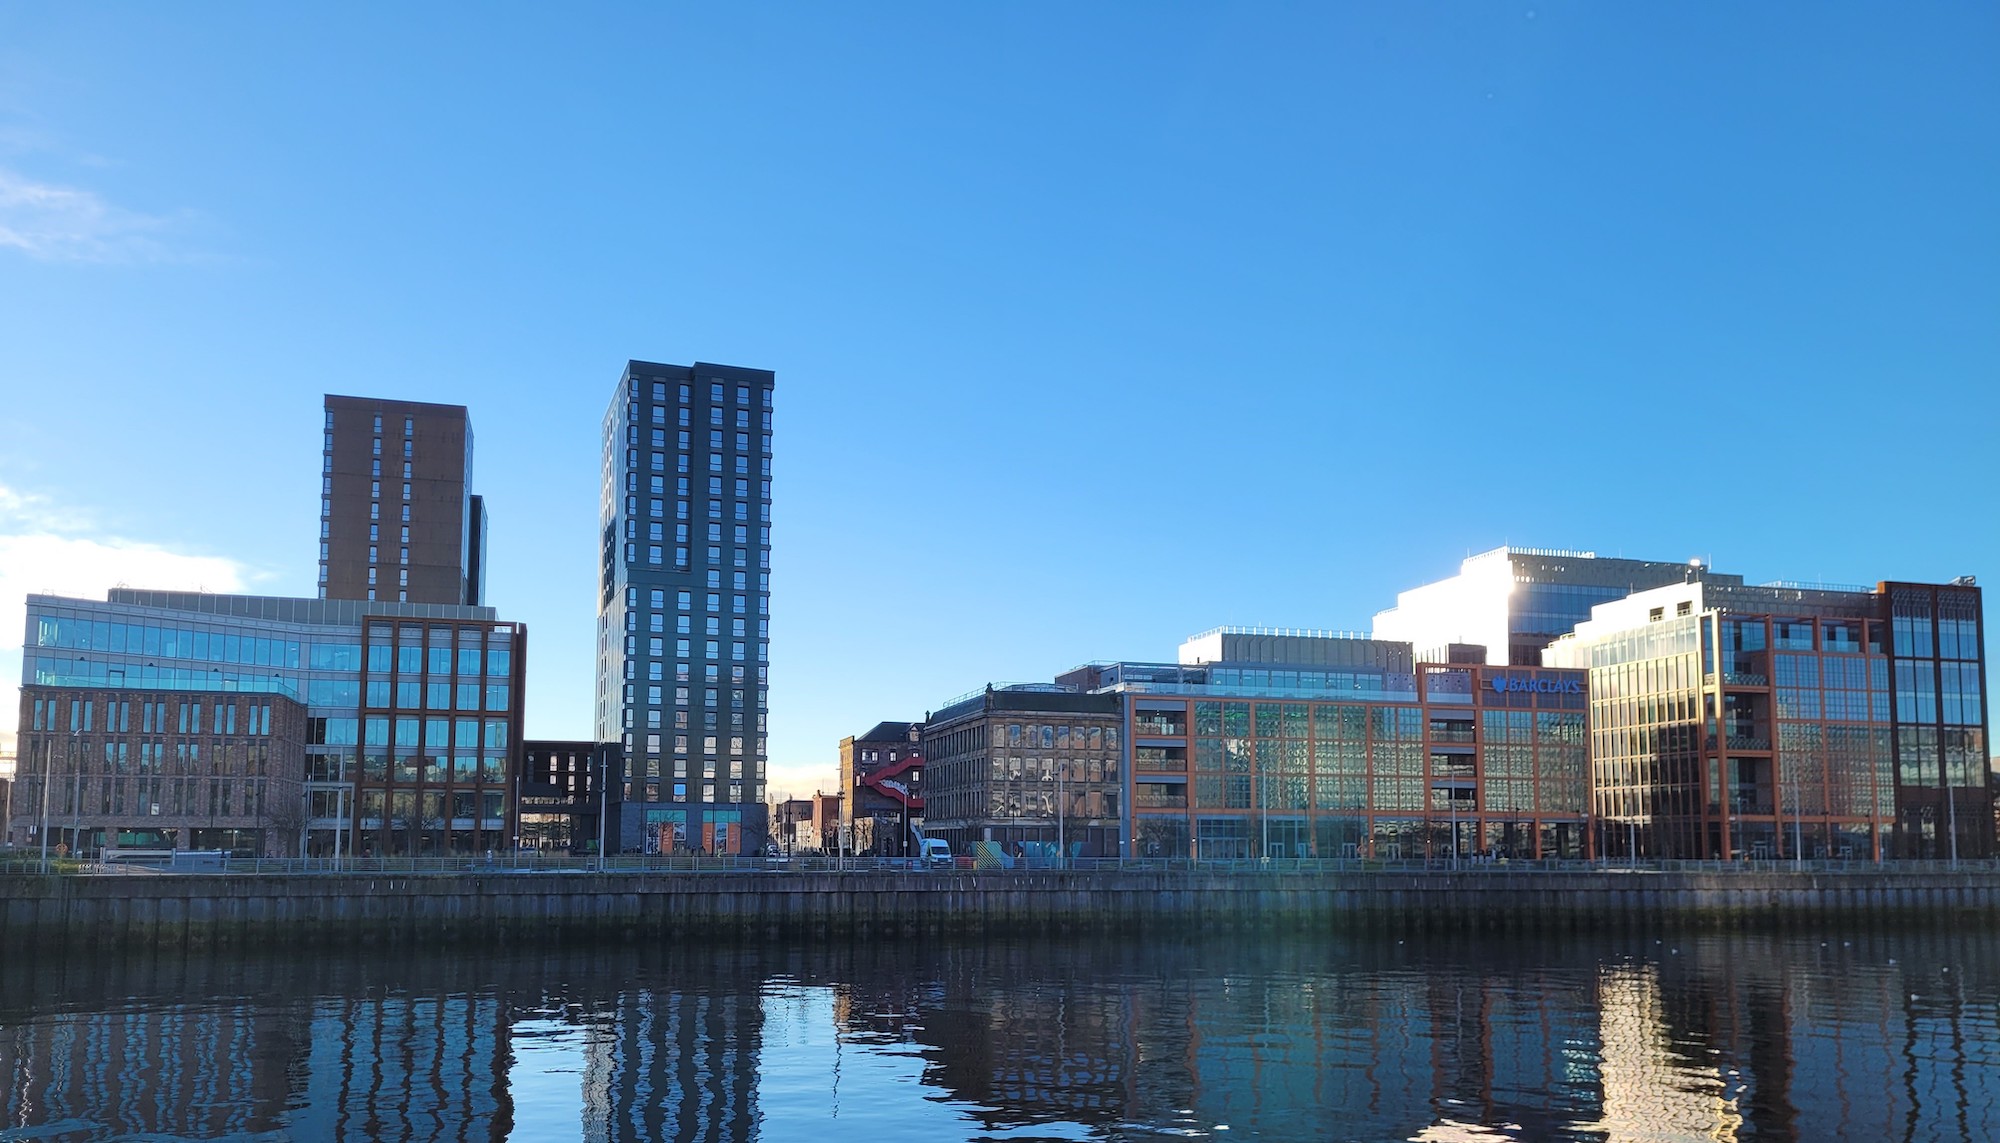 Student Loans Company moves into cutting-edge Glasgow HQ at Buchanan Wharf